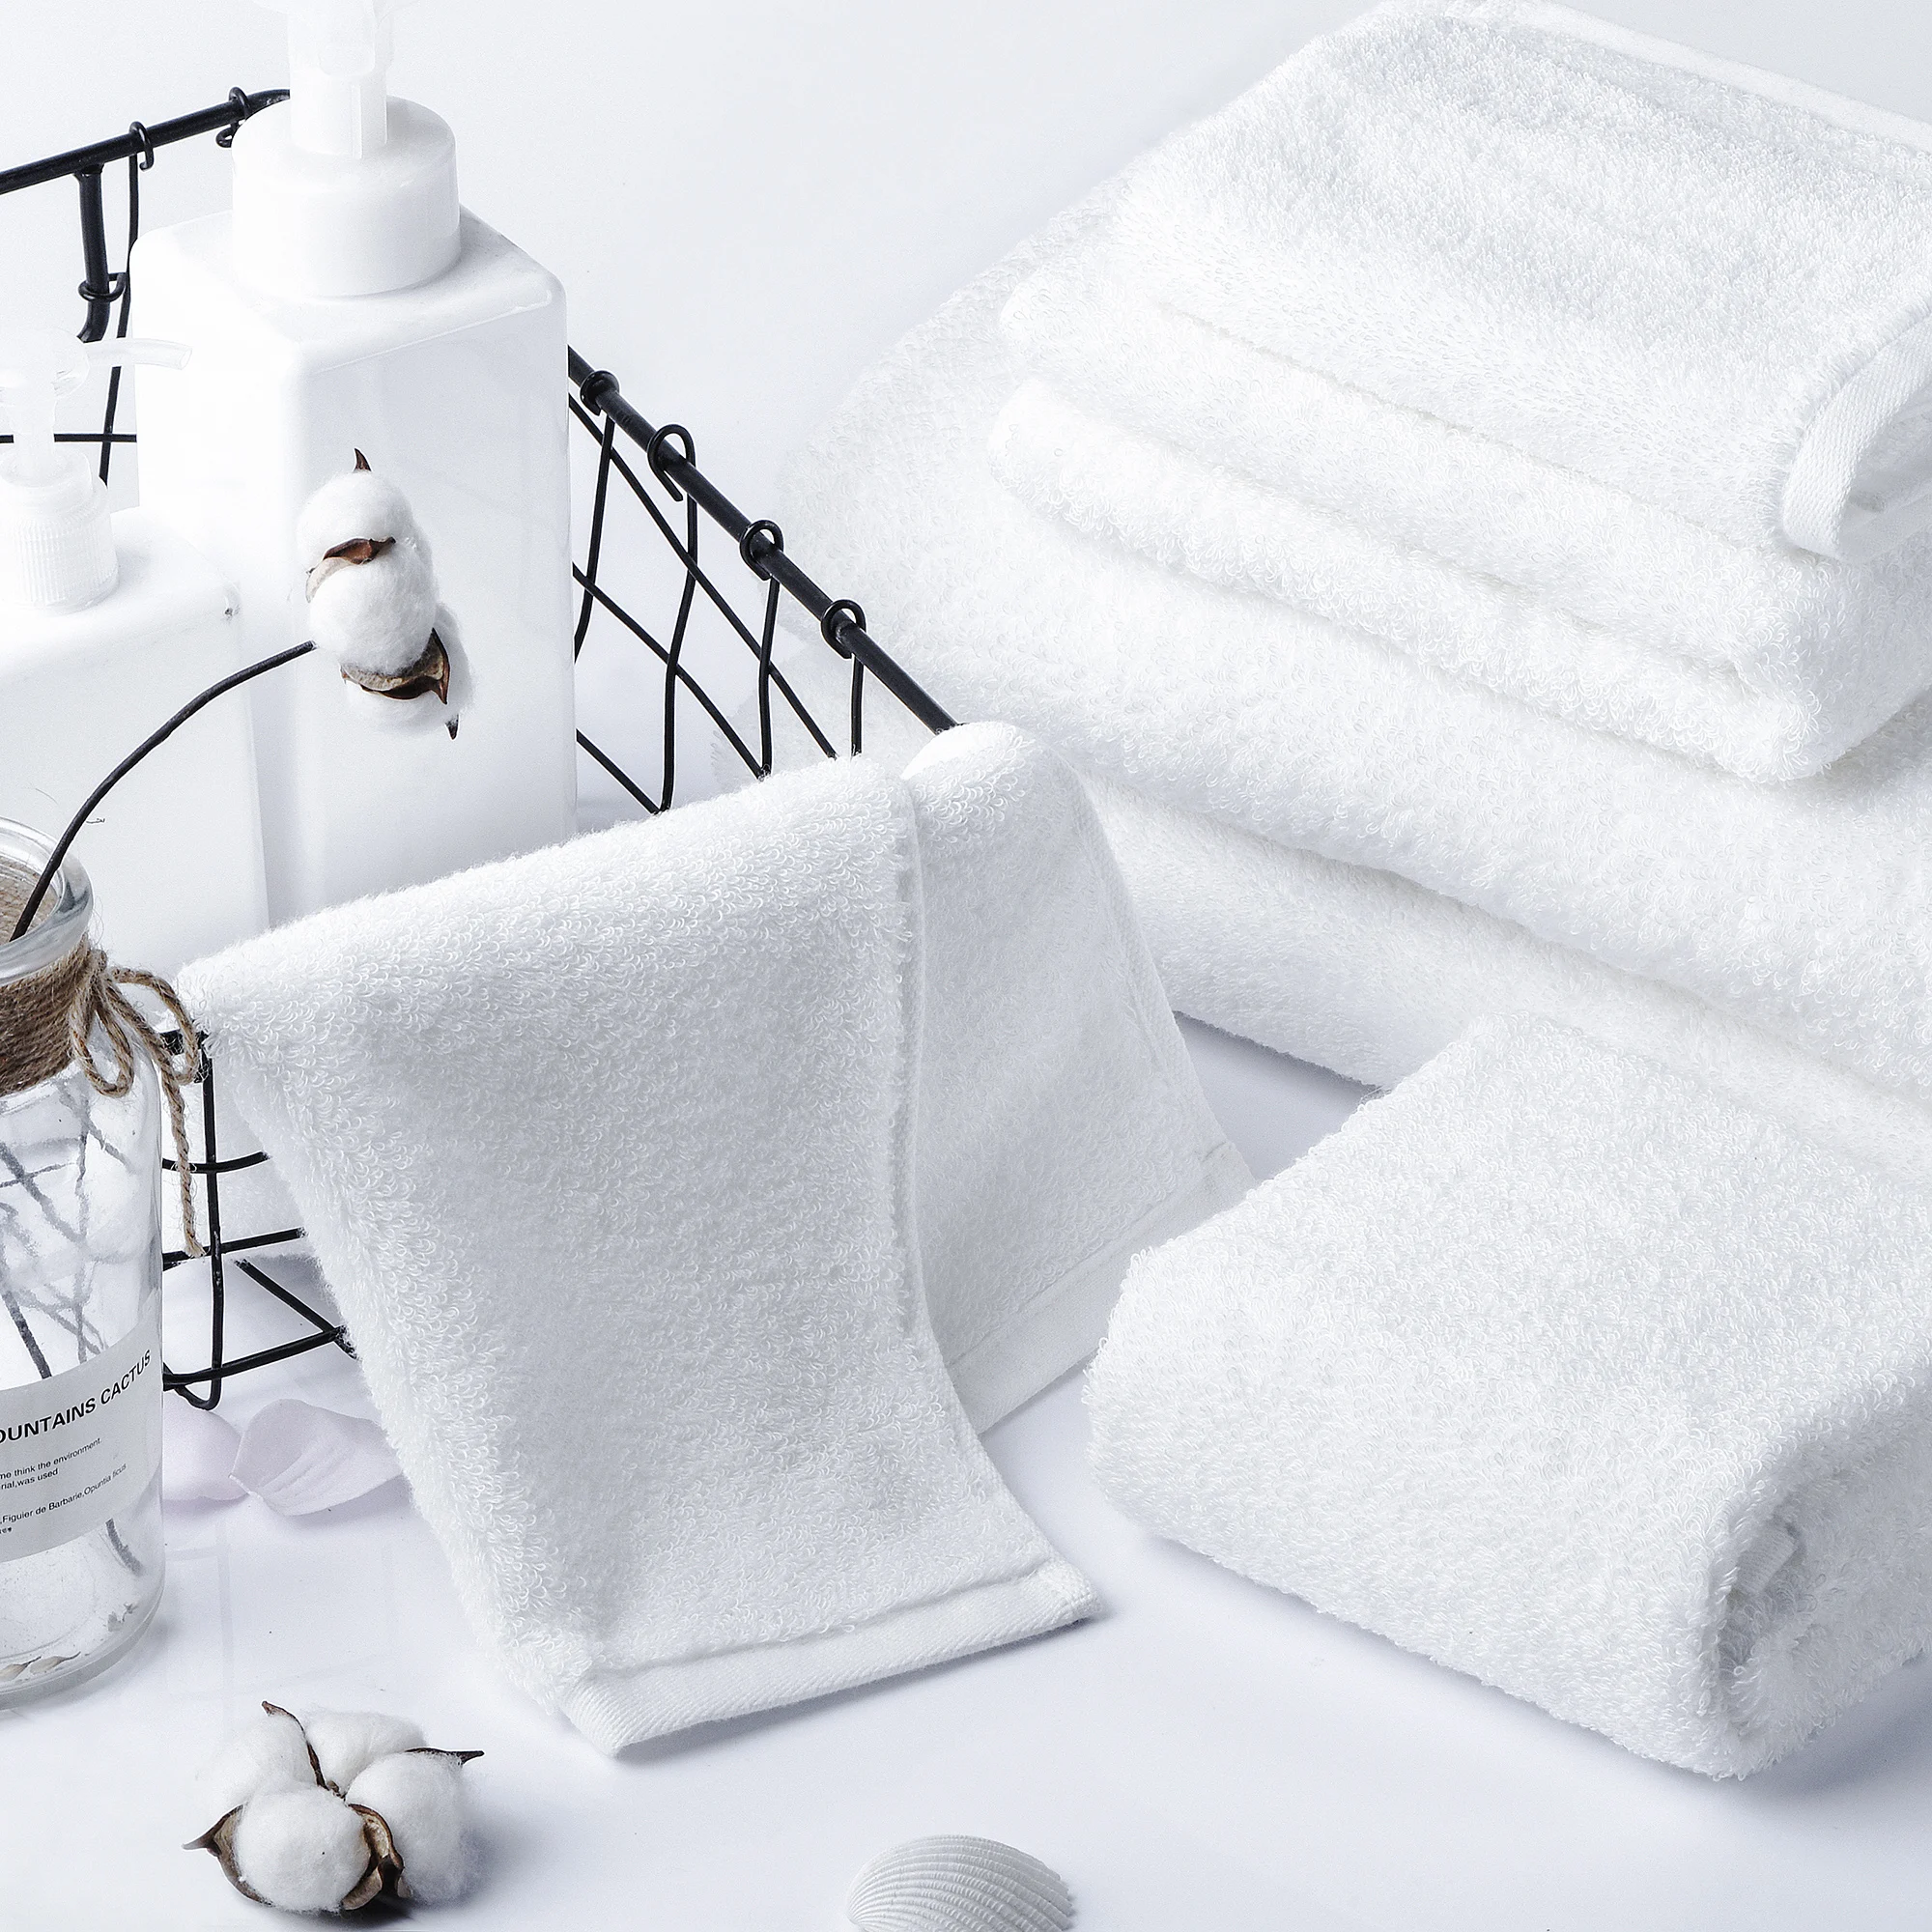 SEMAXE Luxury Bath Towel Set,2 Large Bath Towels,2 Hand Towels,2